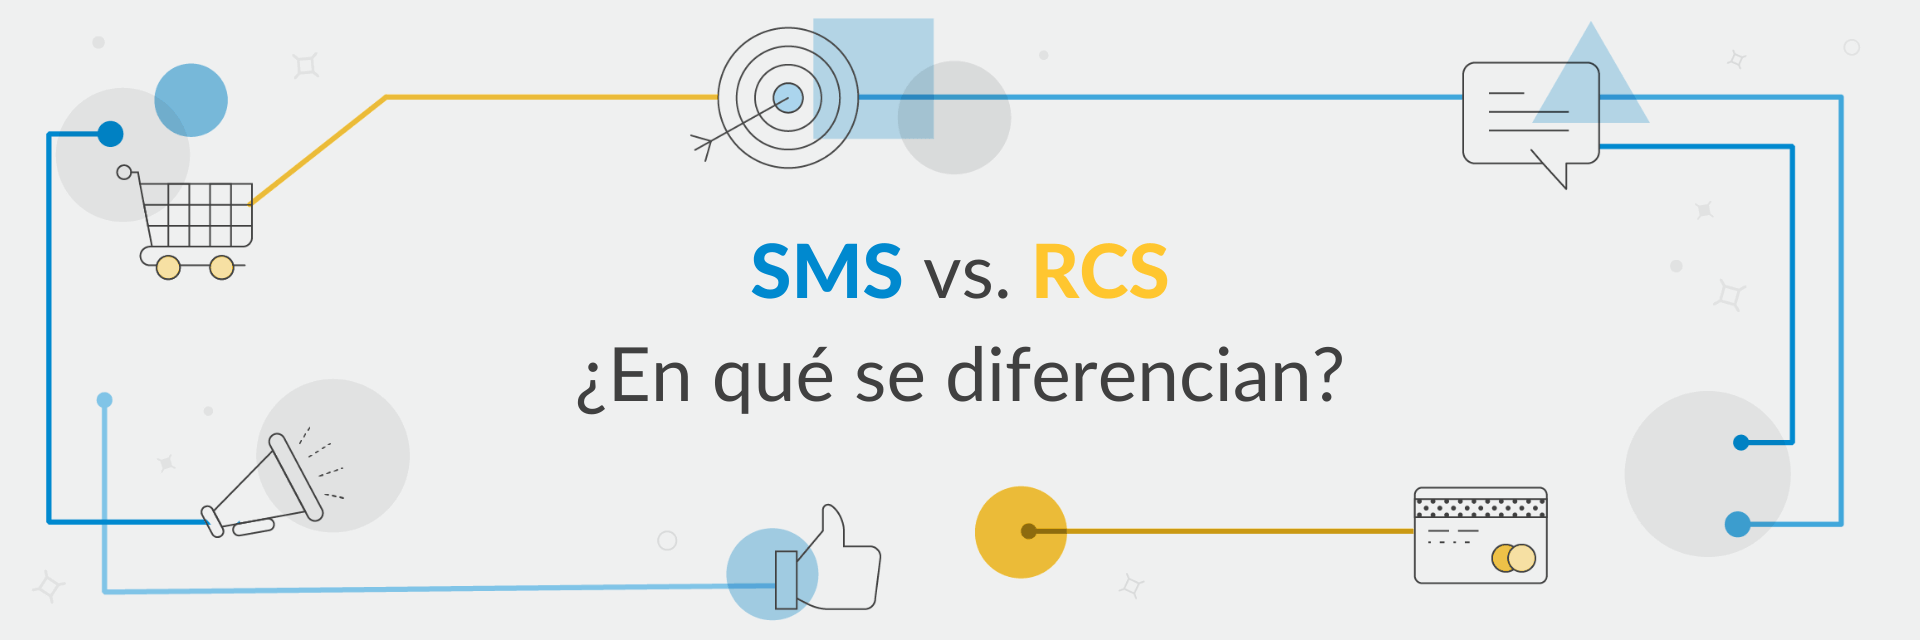 SMS vs RCS header image